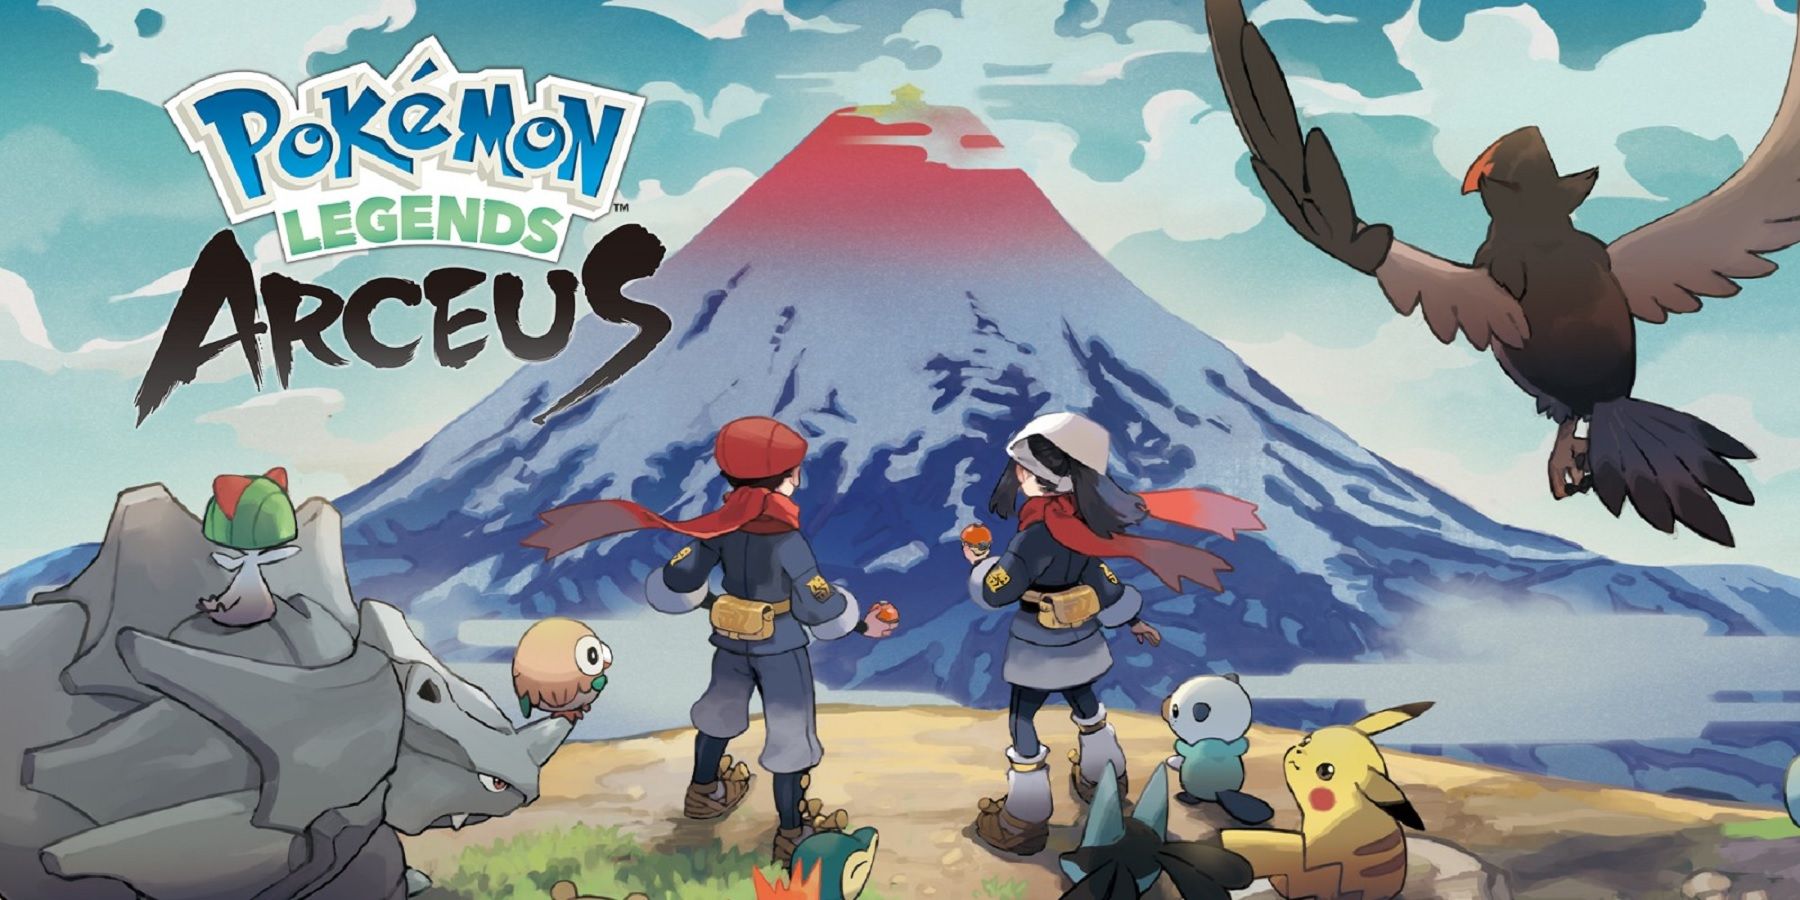 Pokémon Legends: Arceus players find shiny Pokémon exploit - Polygon